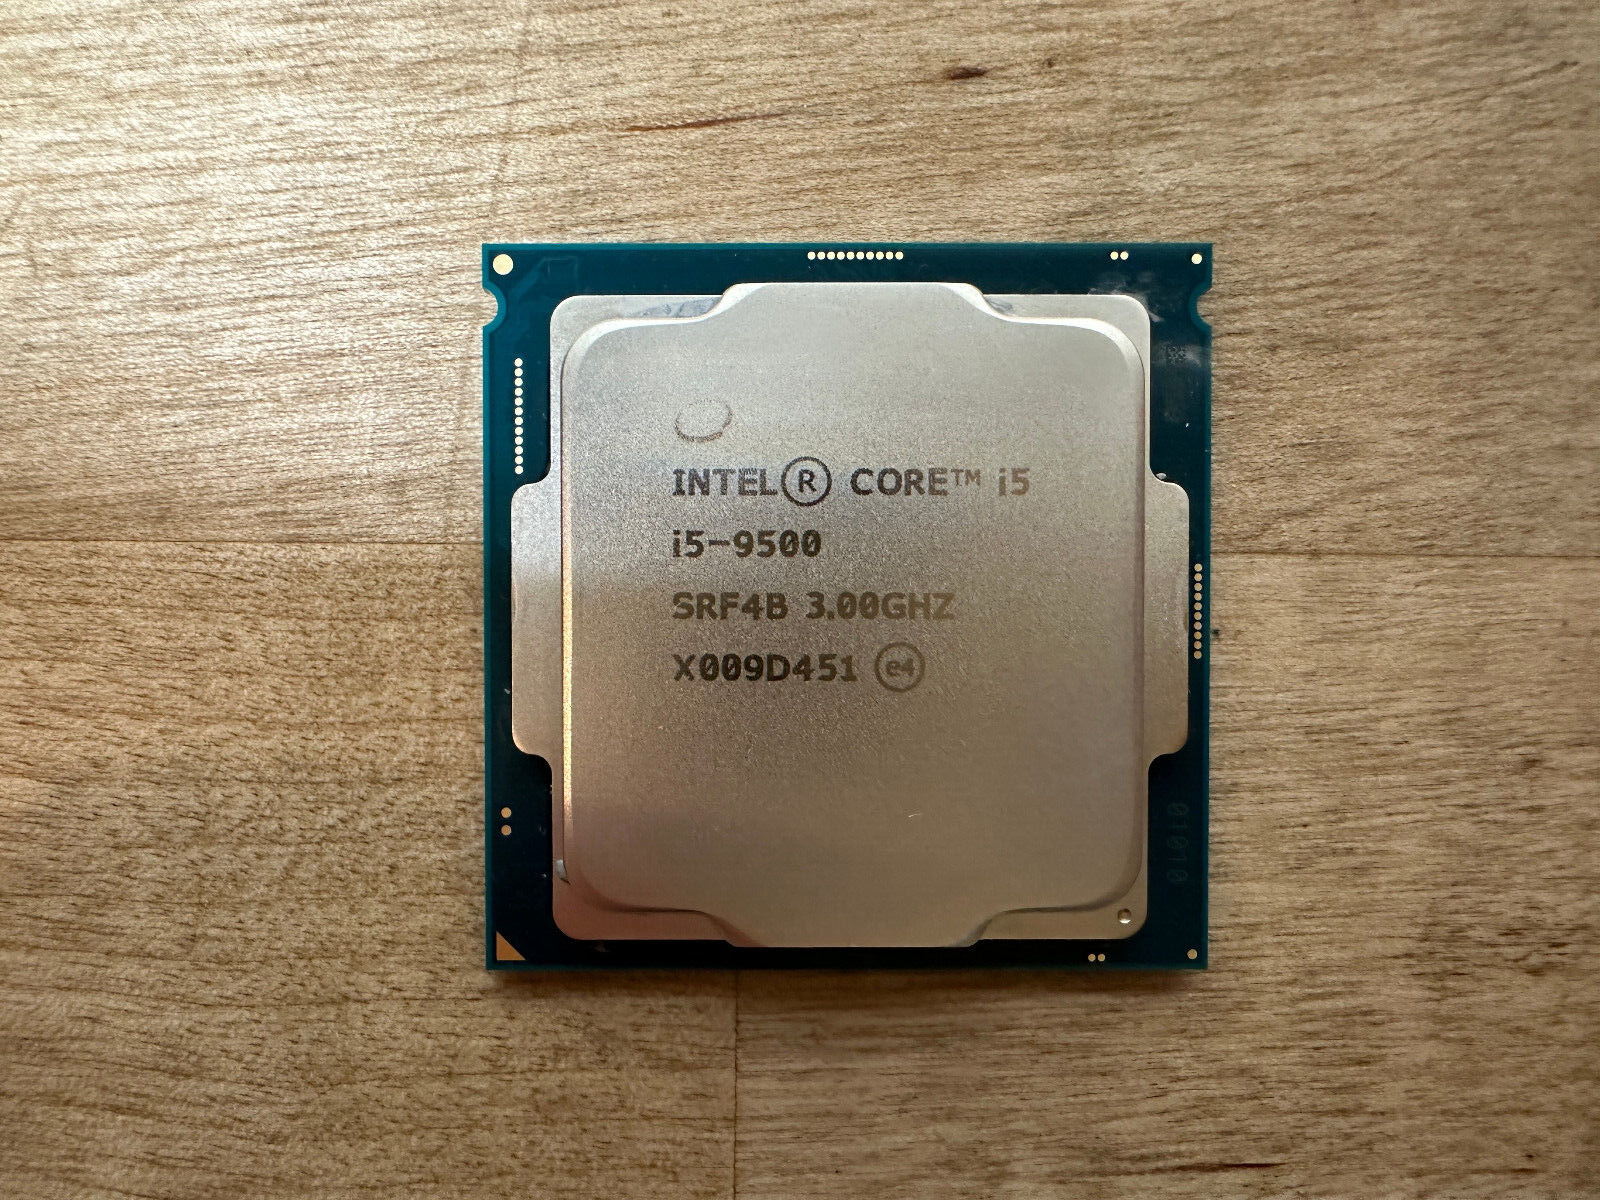 Intel Core i5-9500 SRF4B 3.0GHz 6-Core LGA1151 Coffee Lake Processor Tested Read